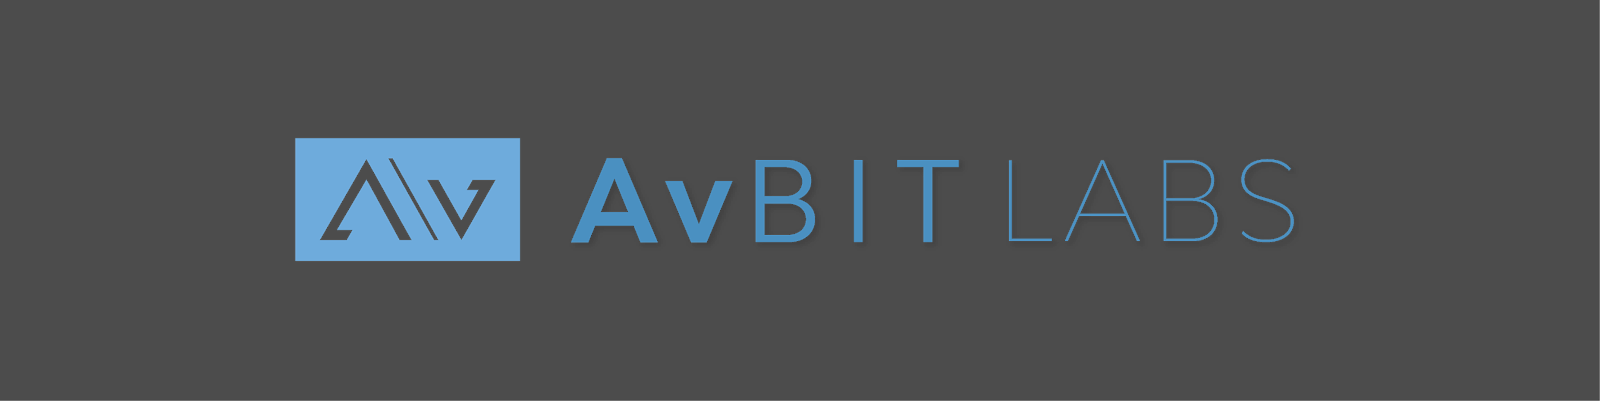 AvBIT Labs Blog